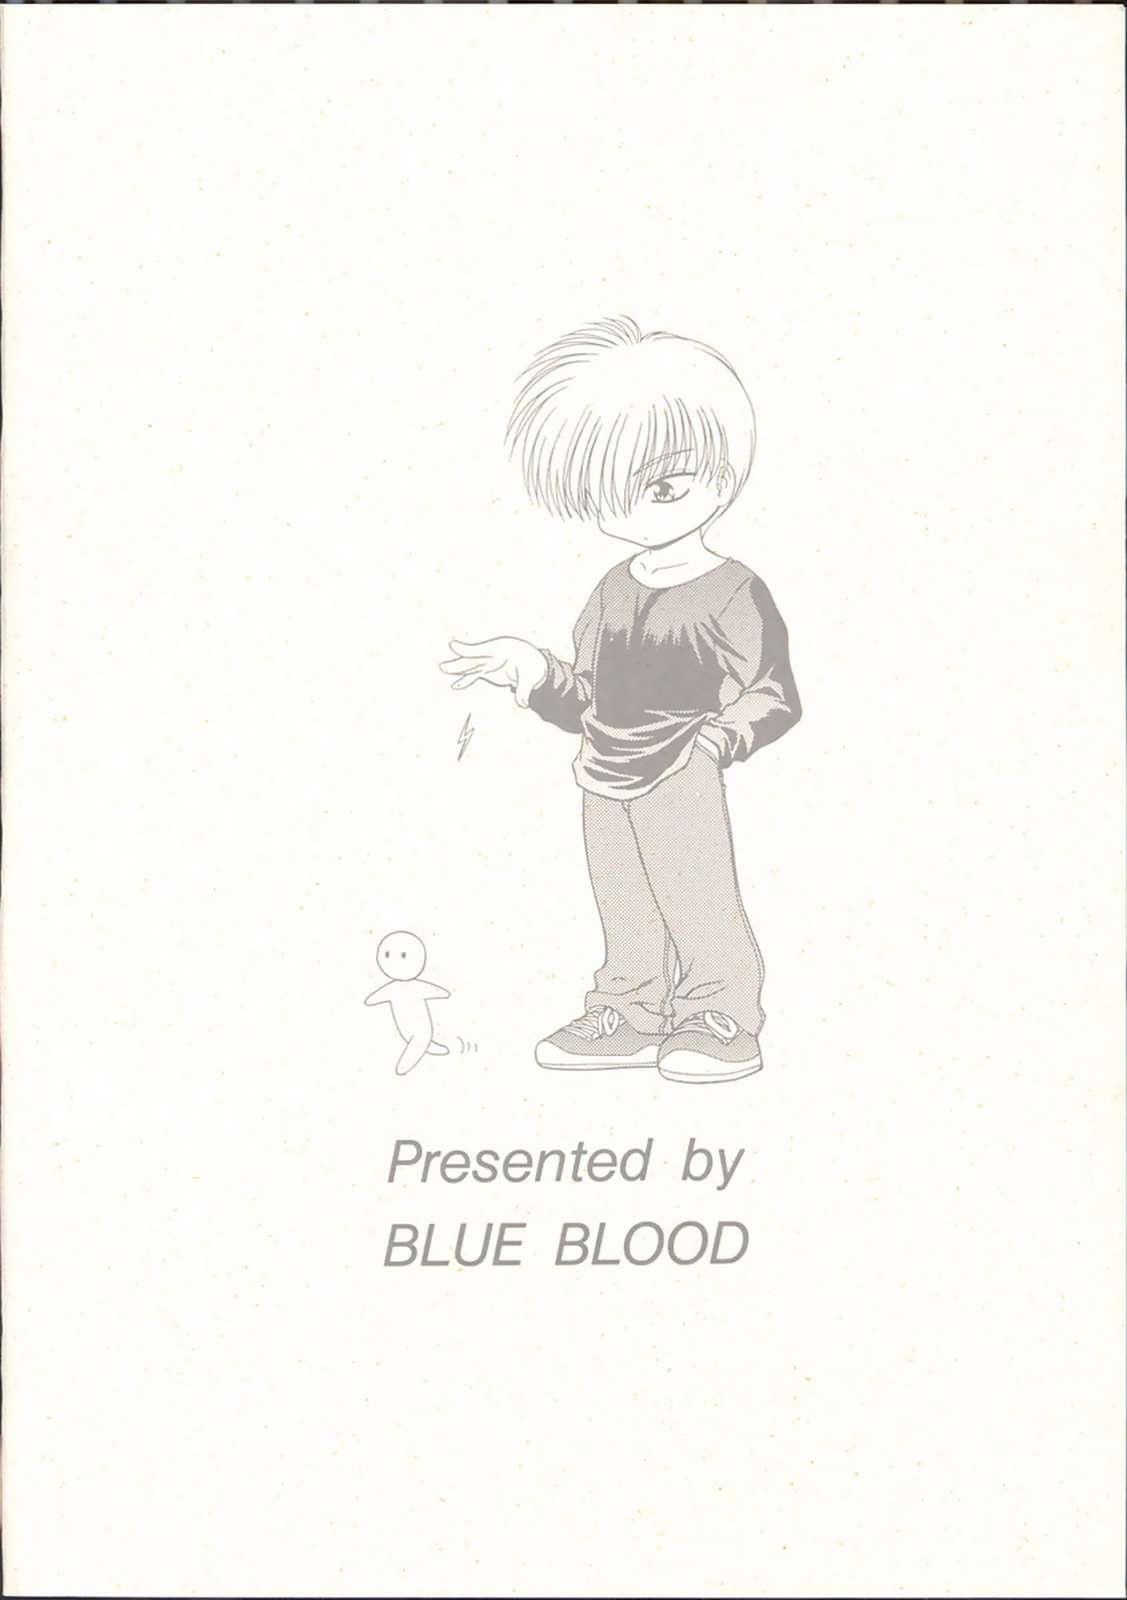 Blue Blood's vol. 7 19